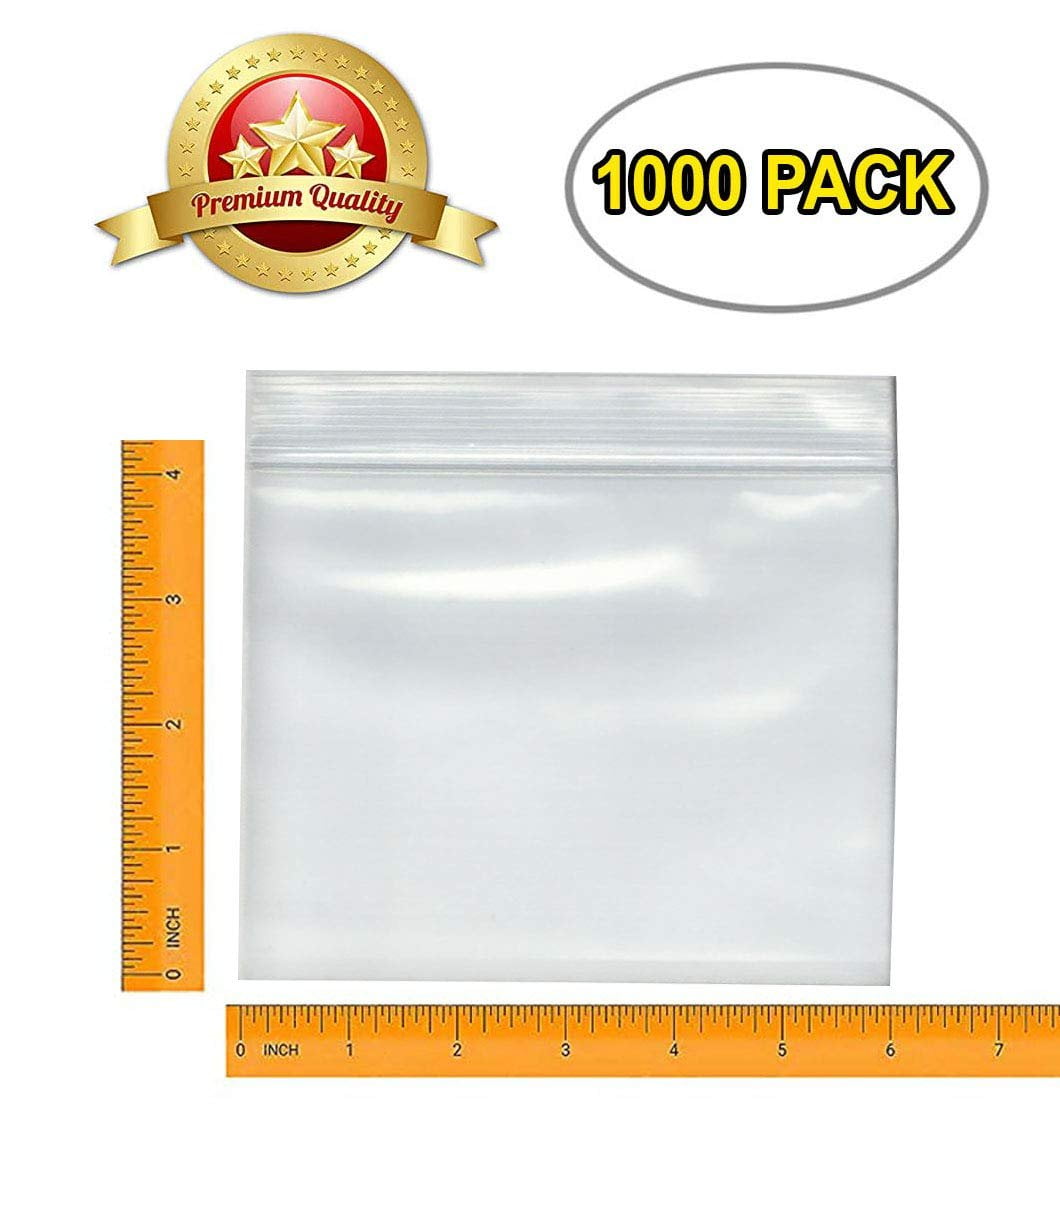 Seal Top Bags by Ziploc® SJN314480